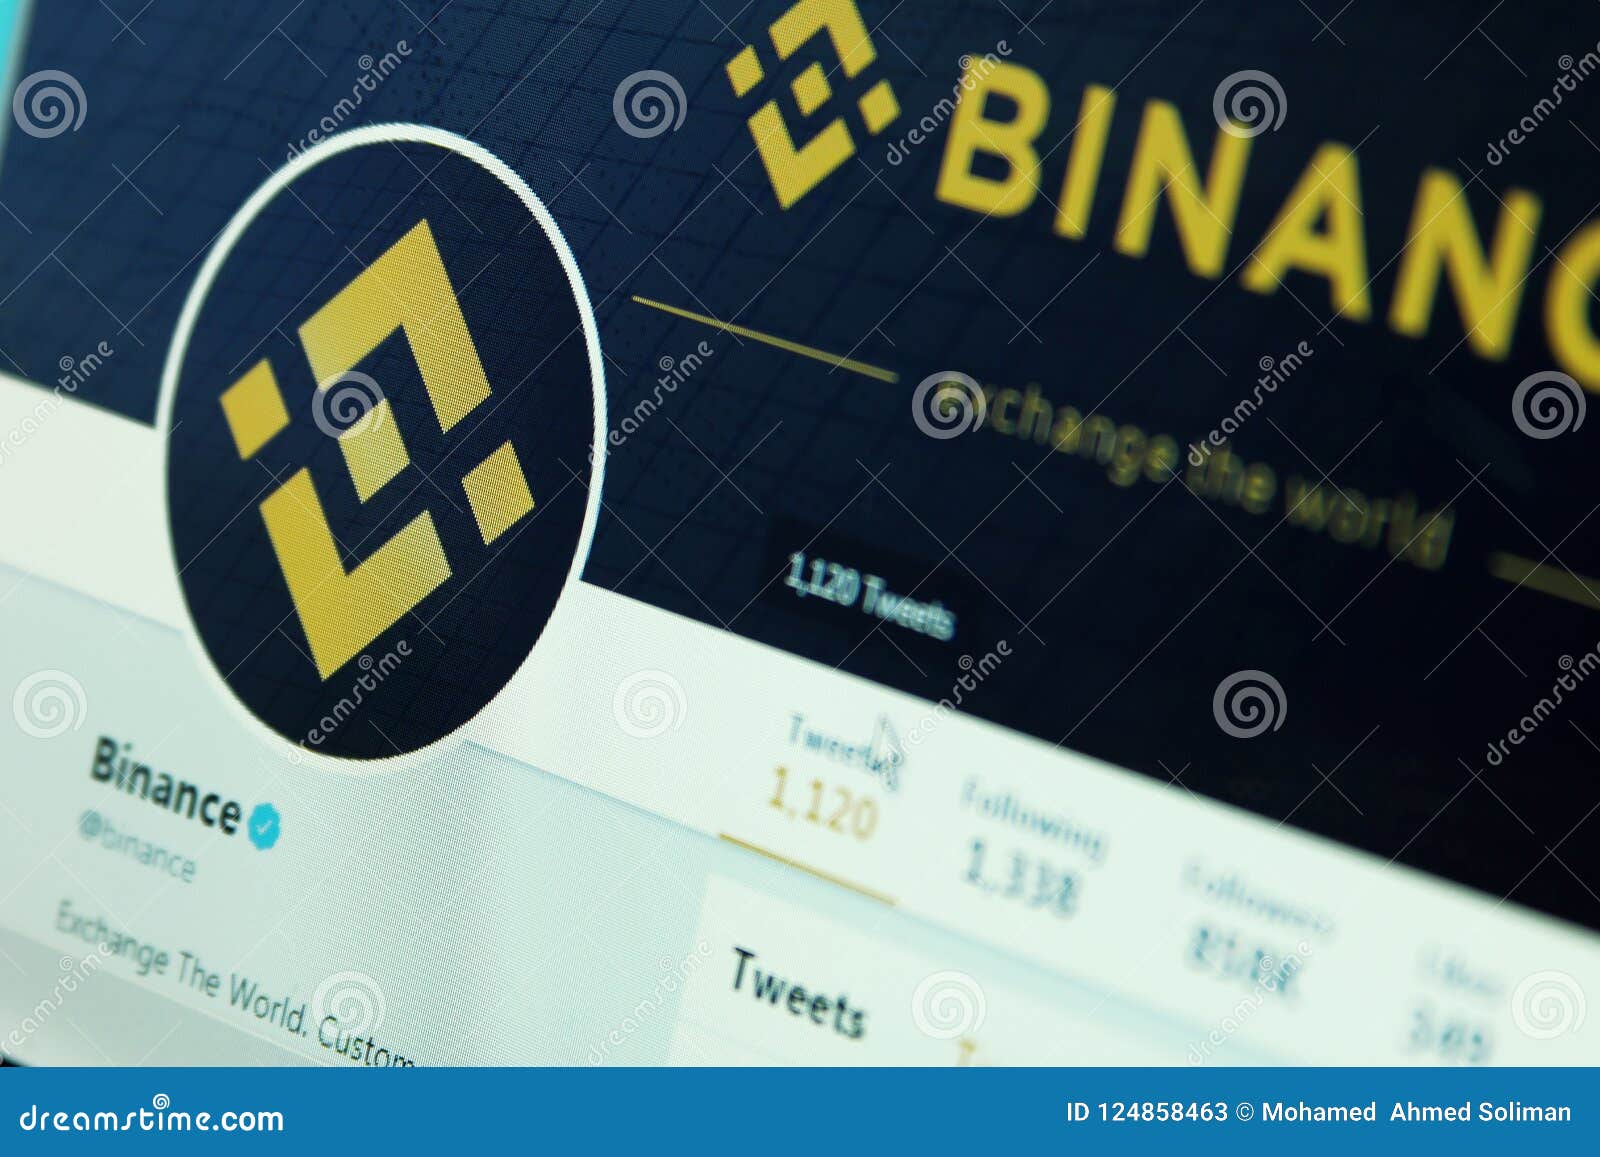 Binance Cryptocurrency Exchange Editorial Stock Photo ...